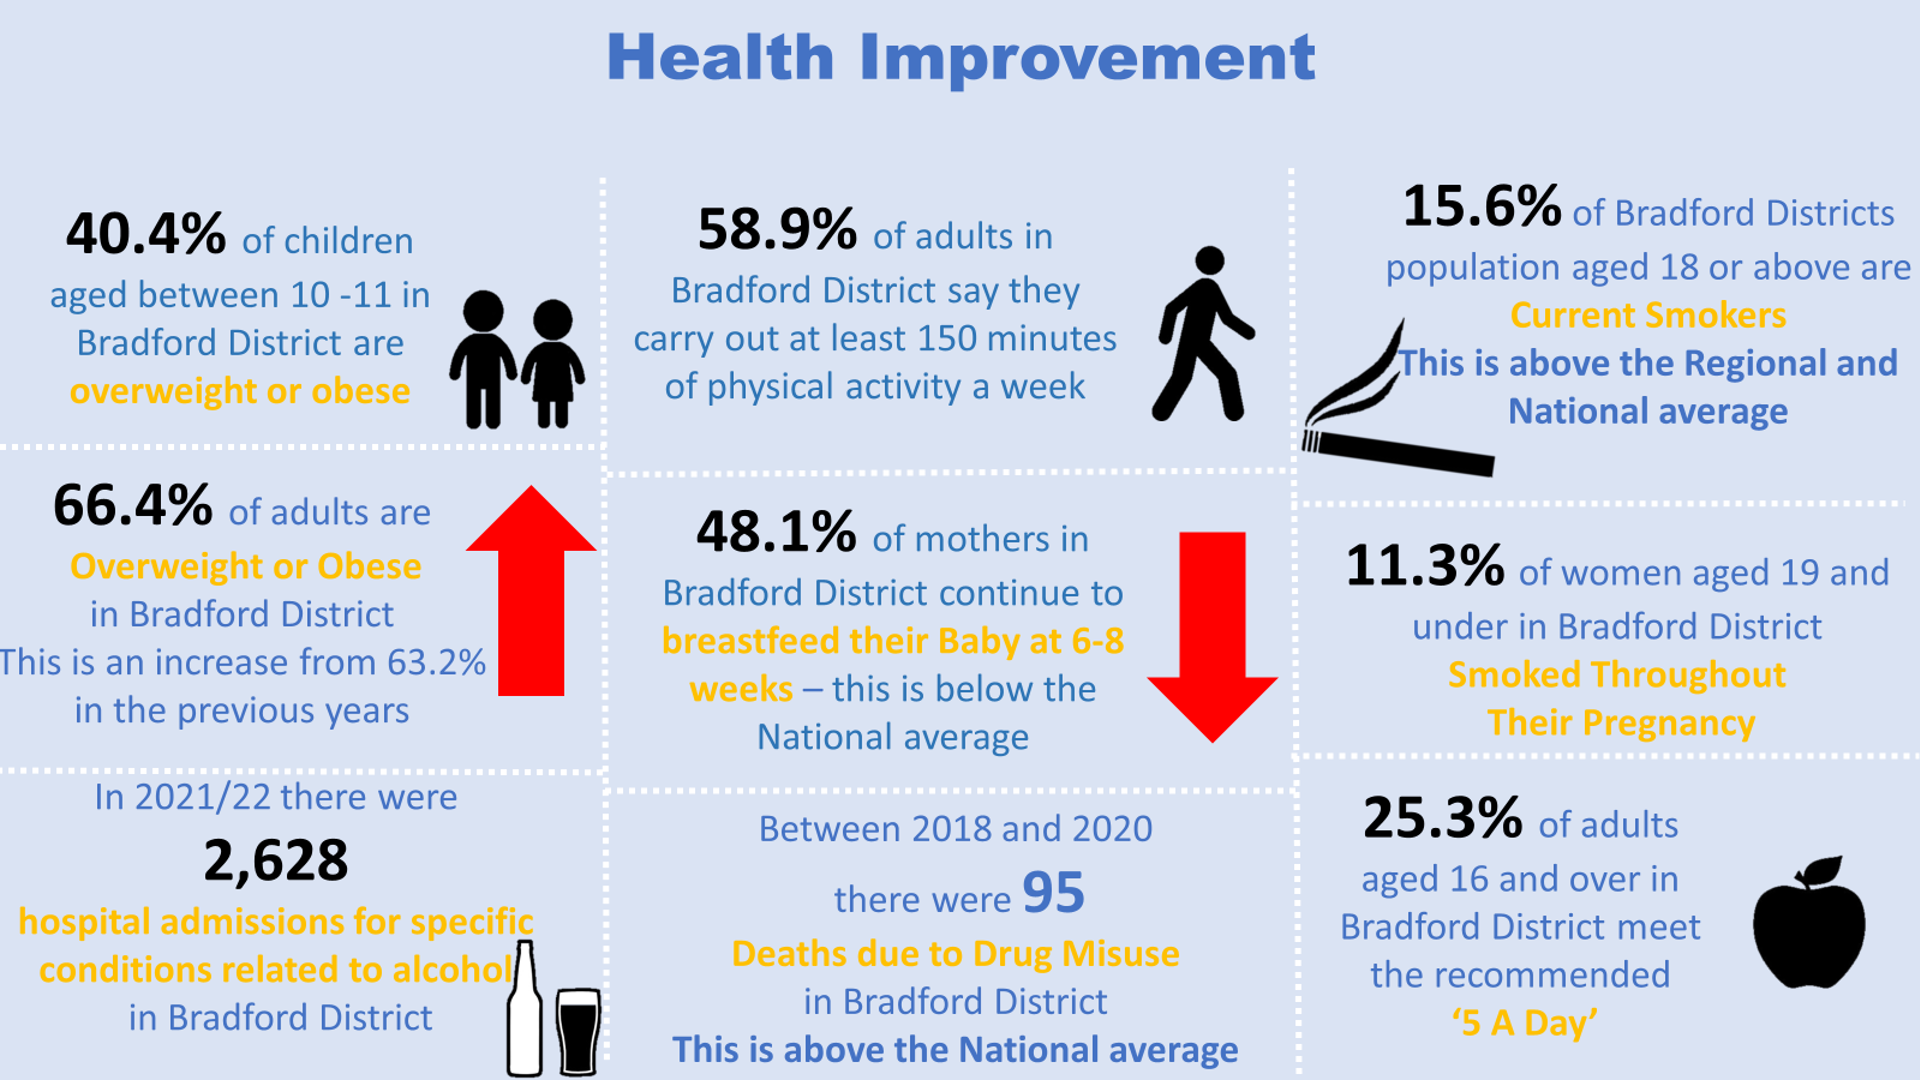 Health Improvement Image